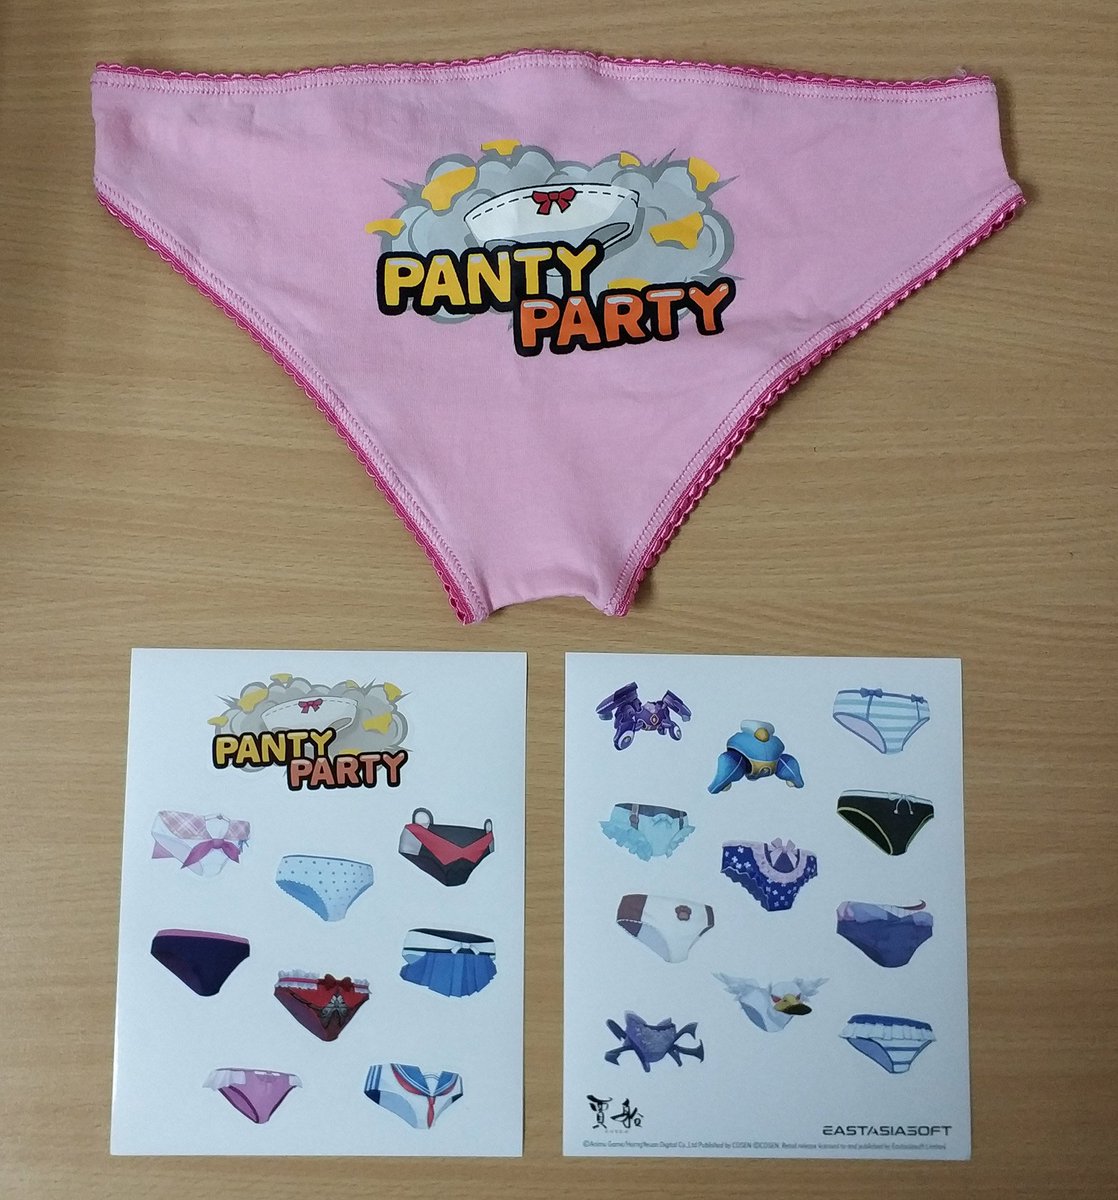 eastasiasoft on X: Sample photo of the underpants & sticker set